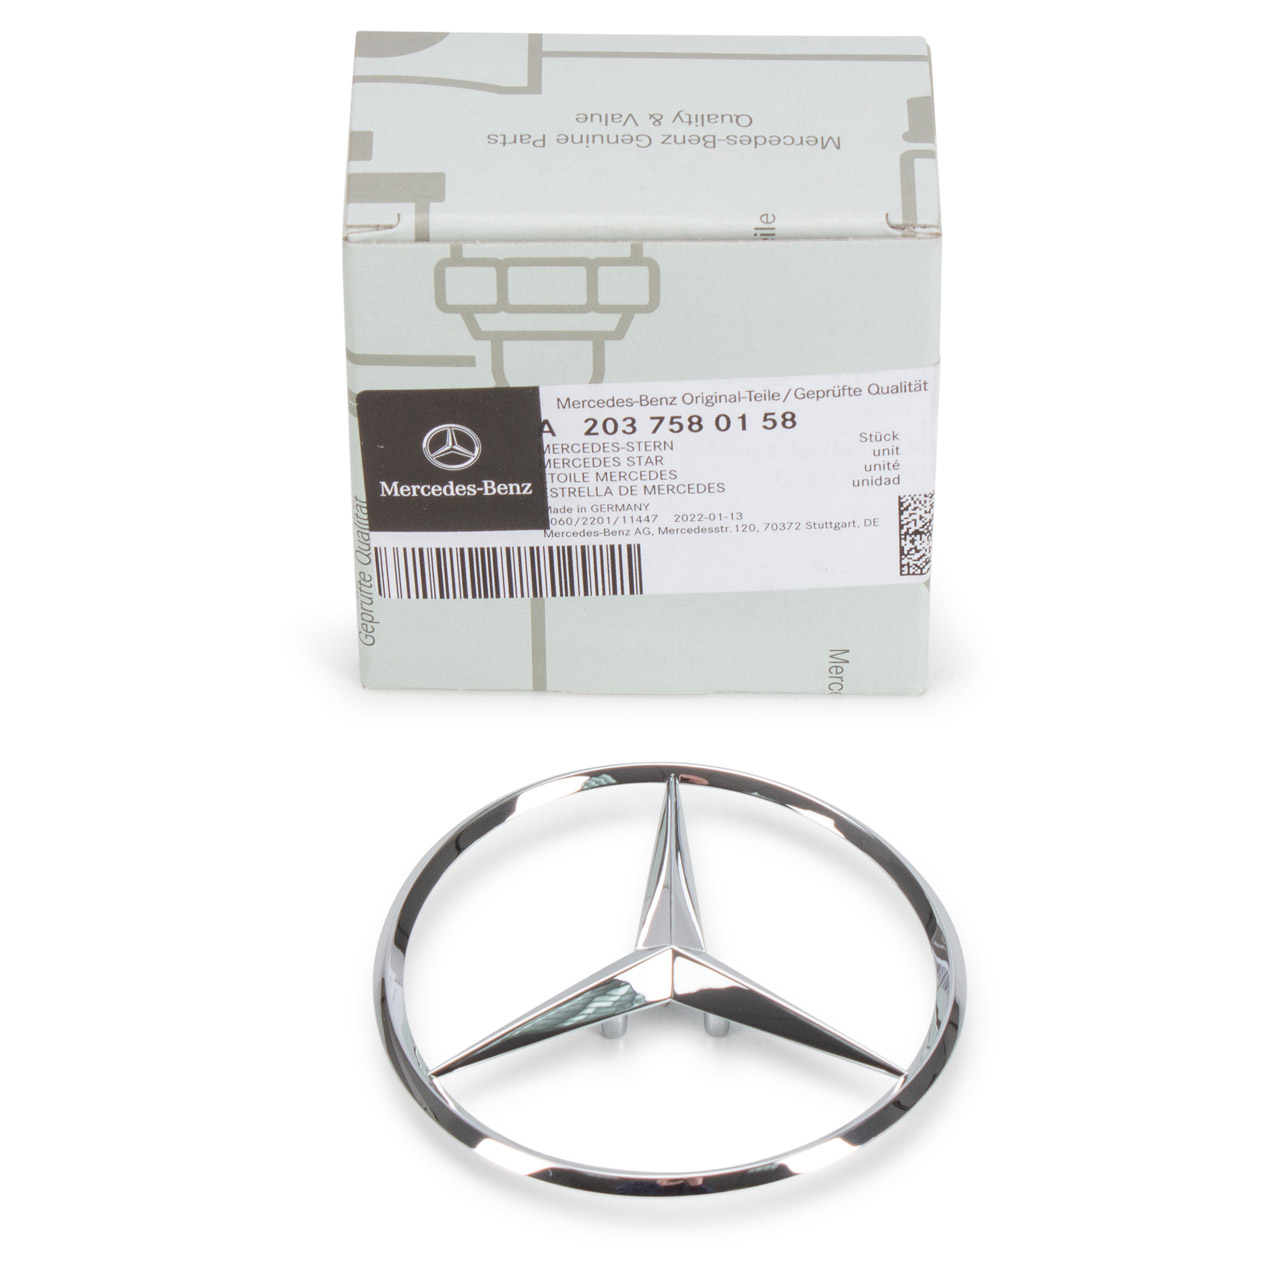 ORIGINAL Mercedes-Benz Emblem Heckklappe W202 W203 CL203 S202 S203 hinten 2037580158